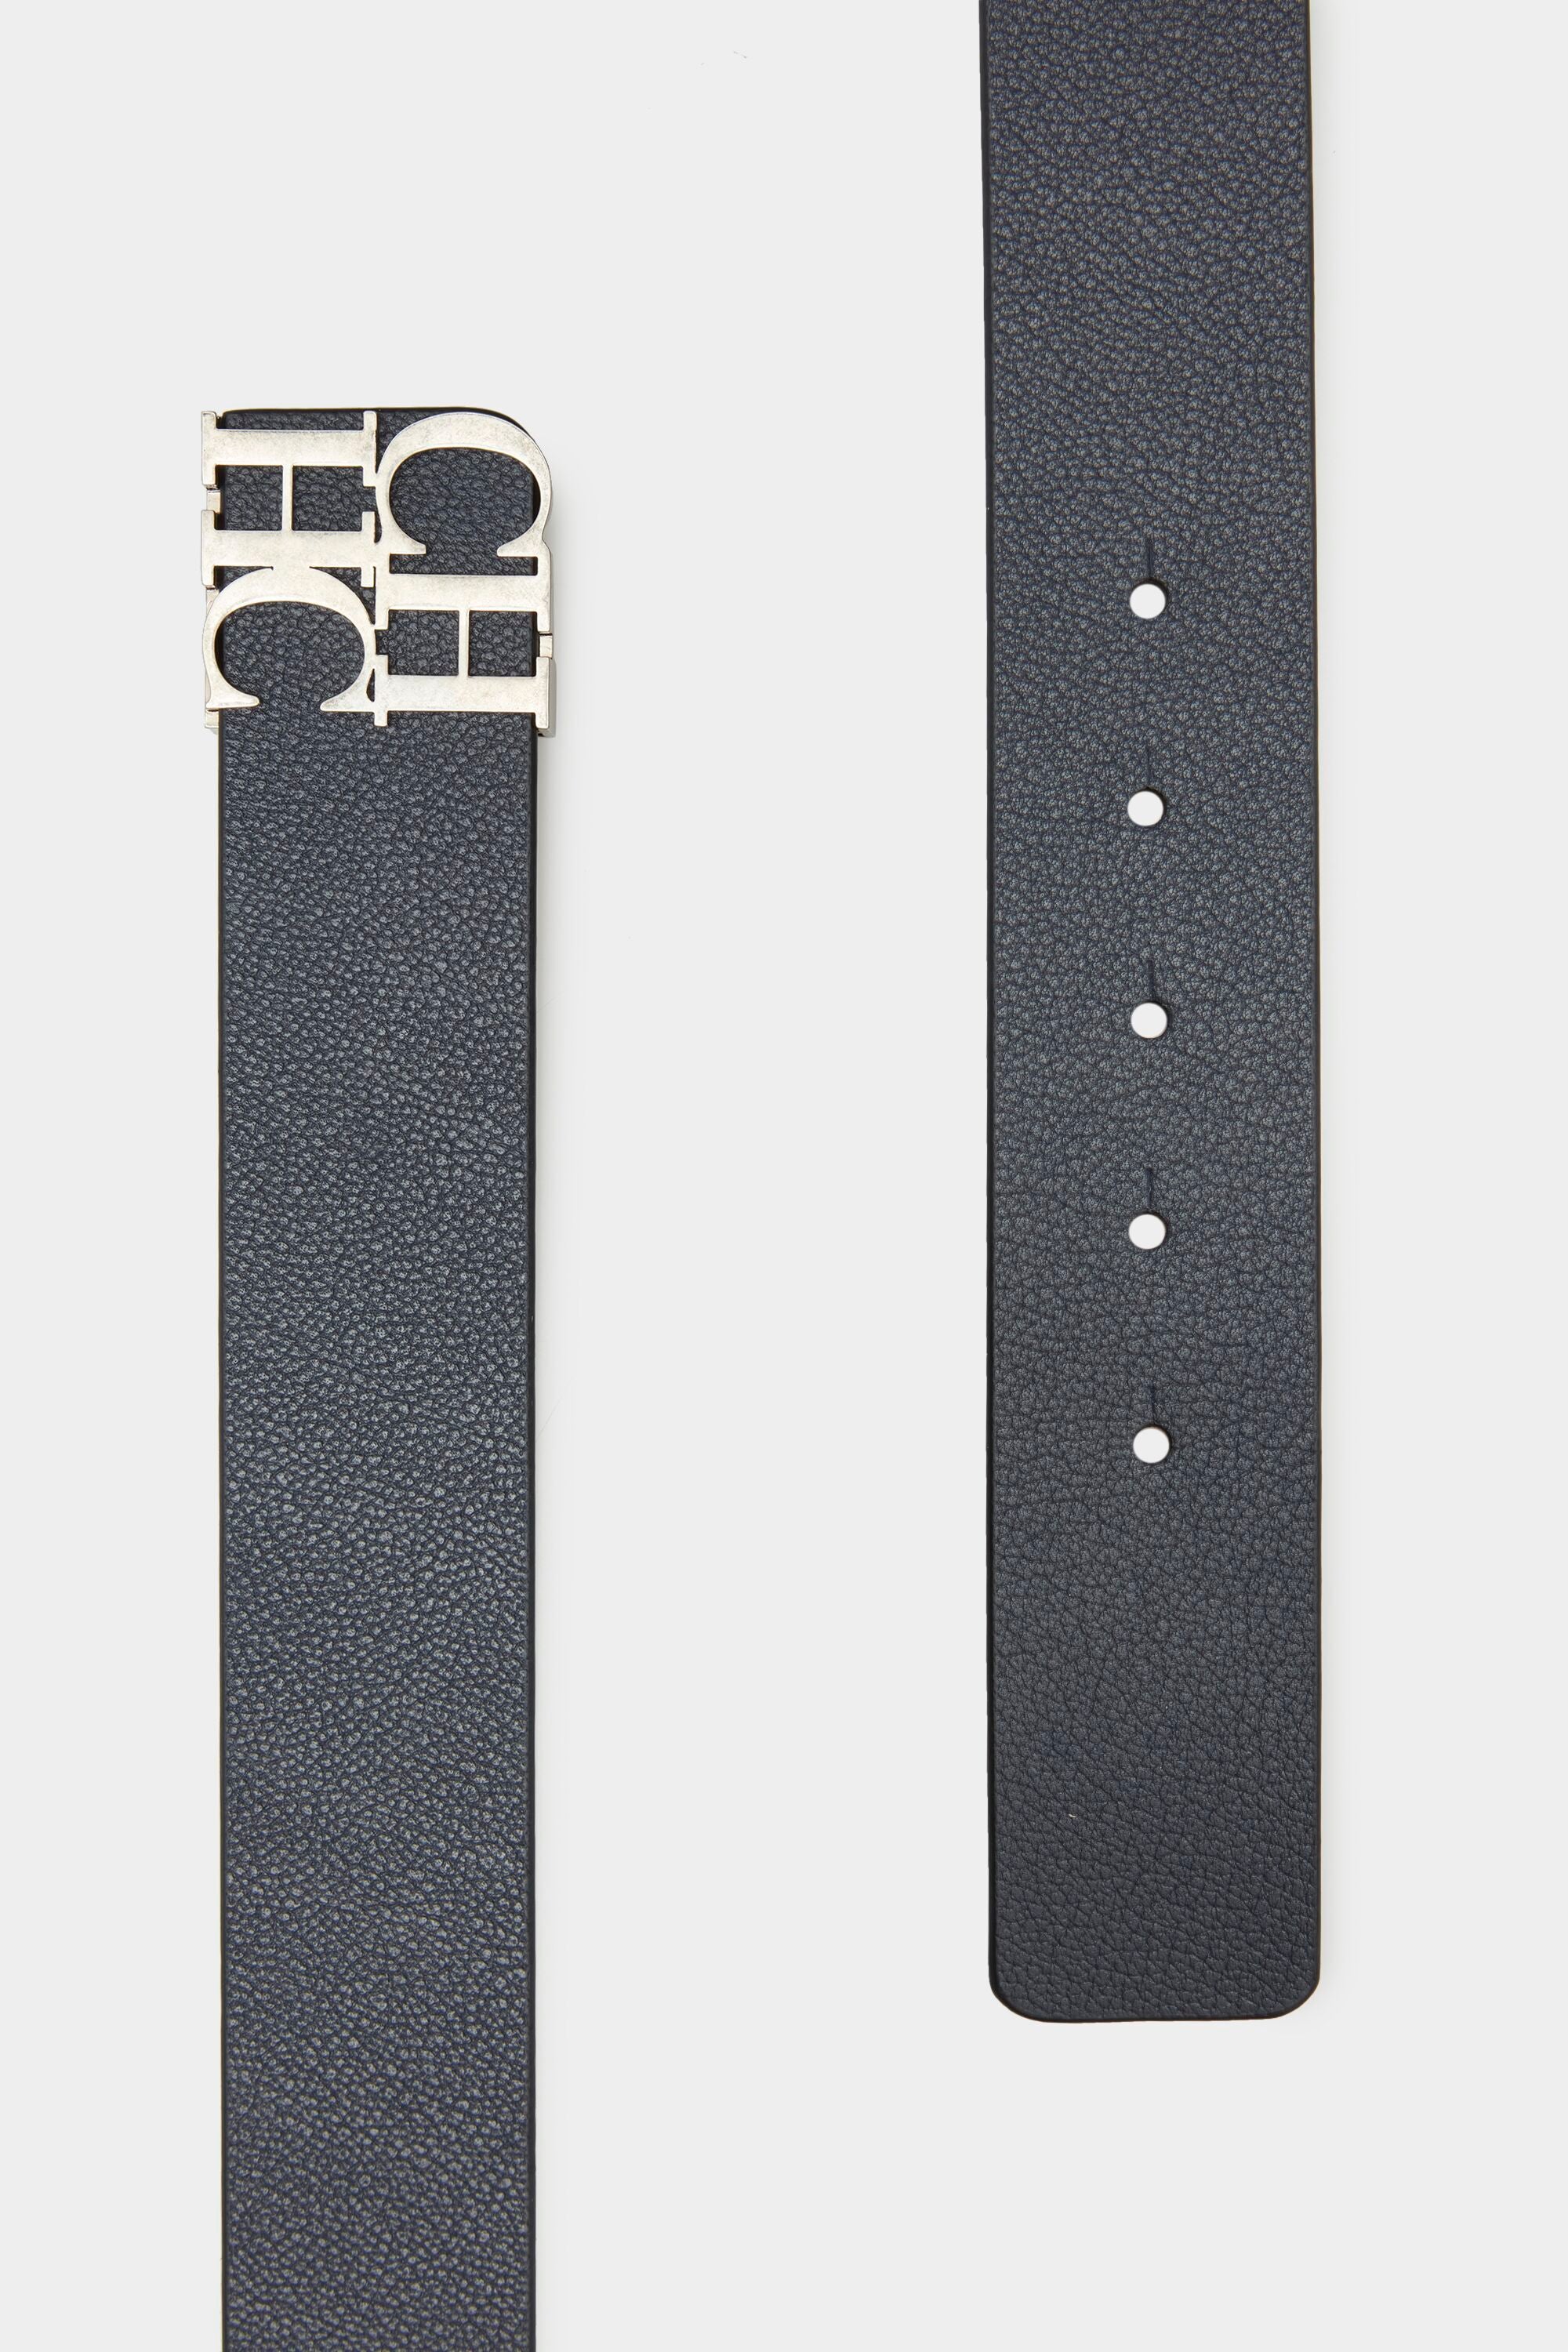 BOSS - Reversible belt in Italian leather with monogram buckle